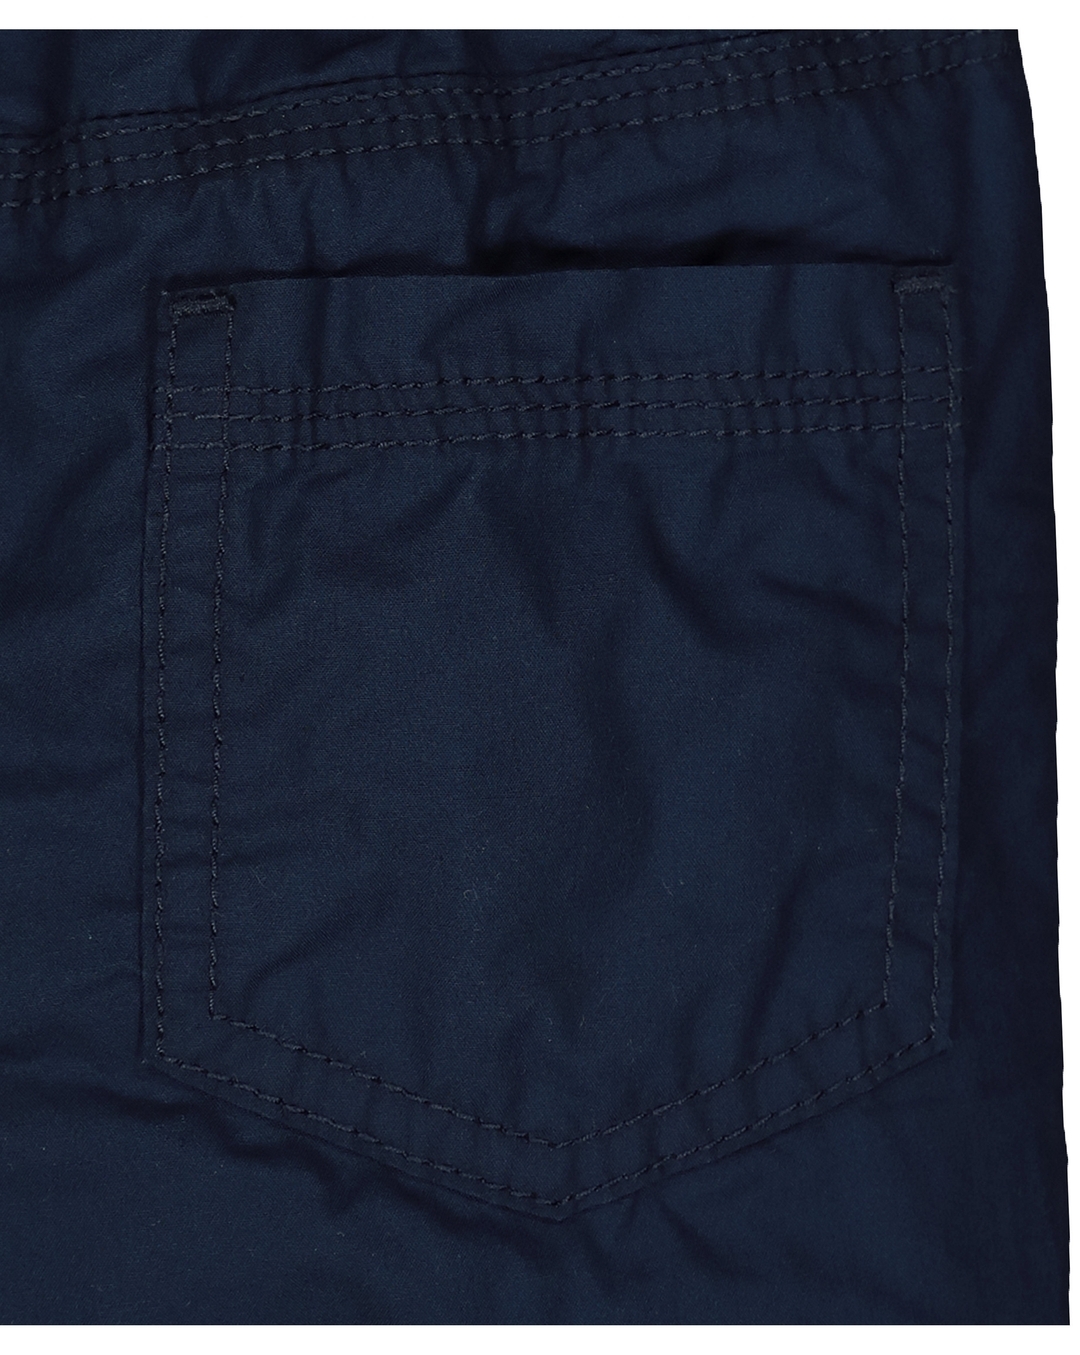 Trousers Pants Mens Thermal Fleece Lined Elasticated Cargo Combat Work  Walking | eBay